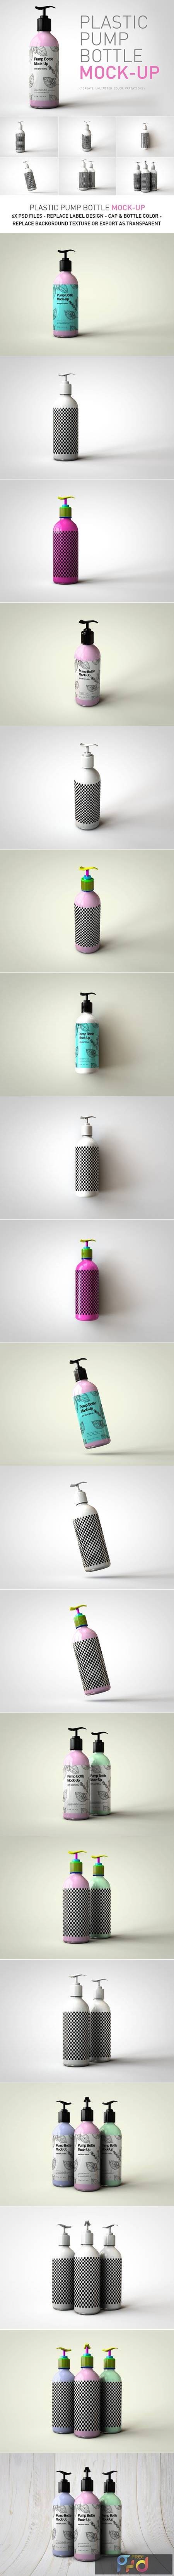 Plastic Pump Bottle Mock-Up 4823852 1